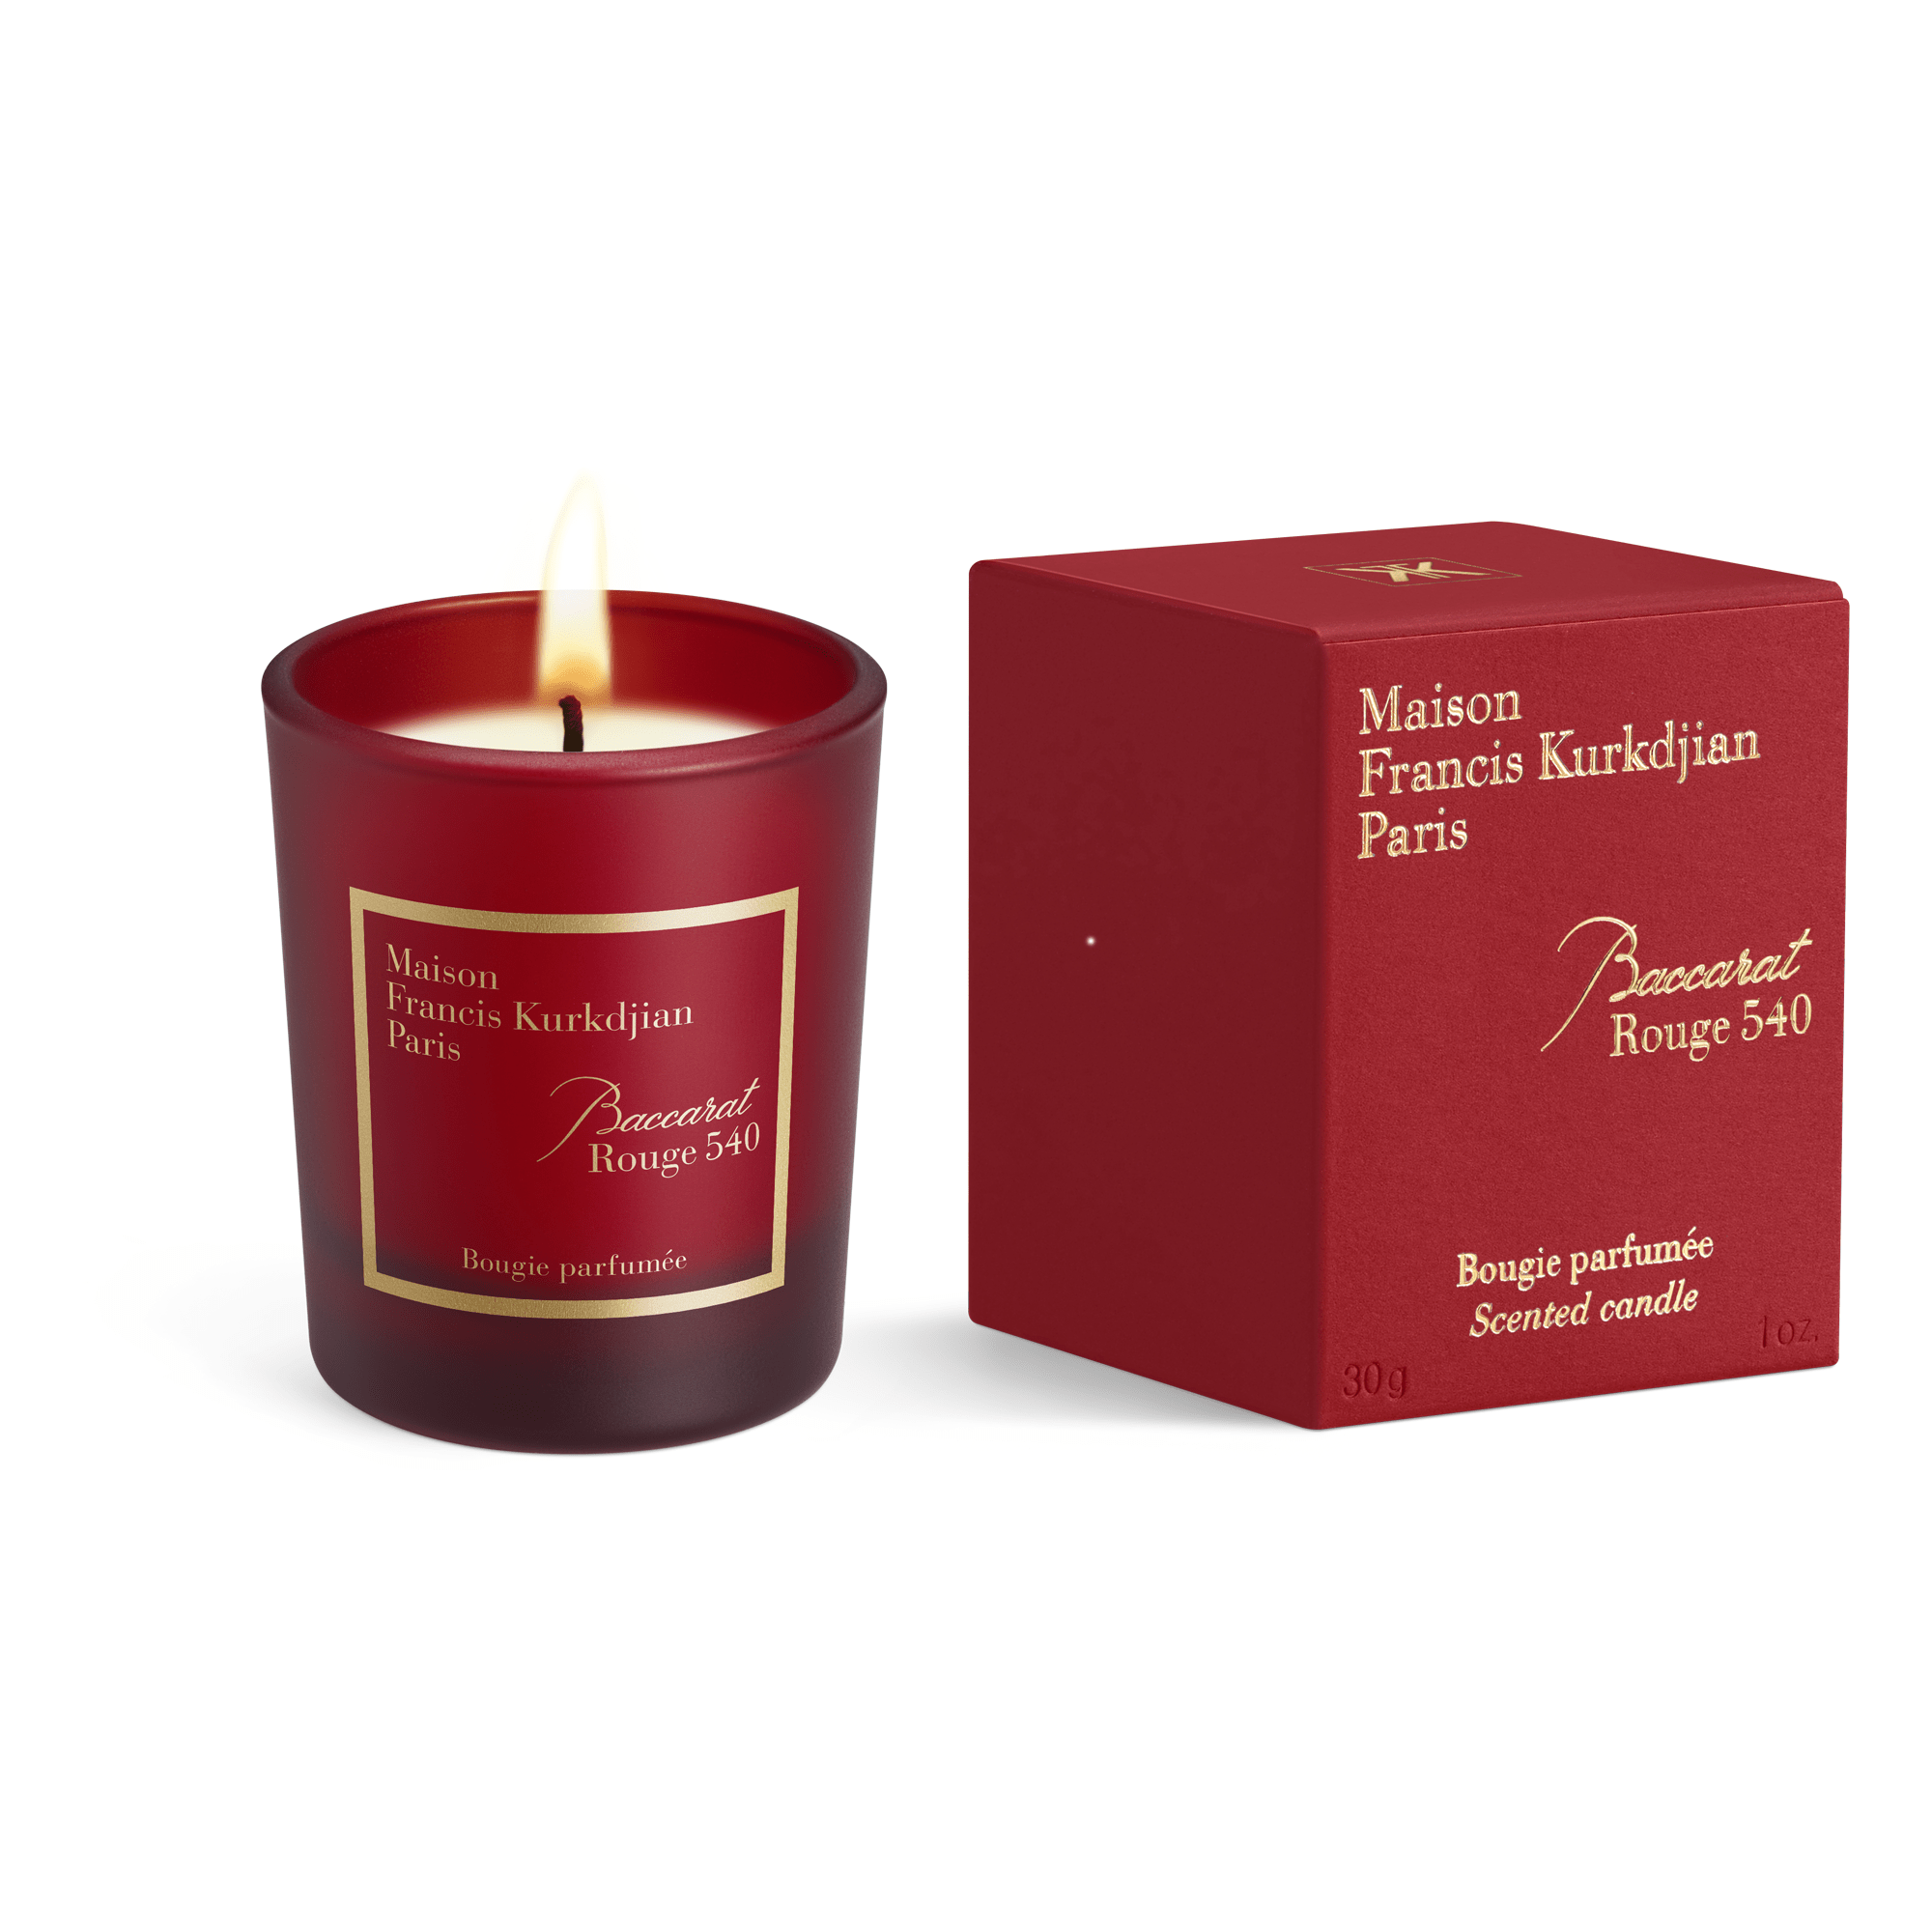 Baccarat Rouge 540 30 g candle by Maison Francis Kurkdjian